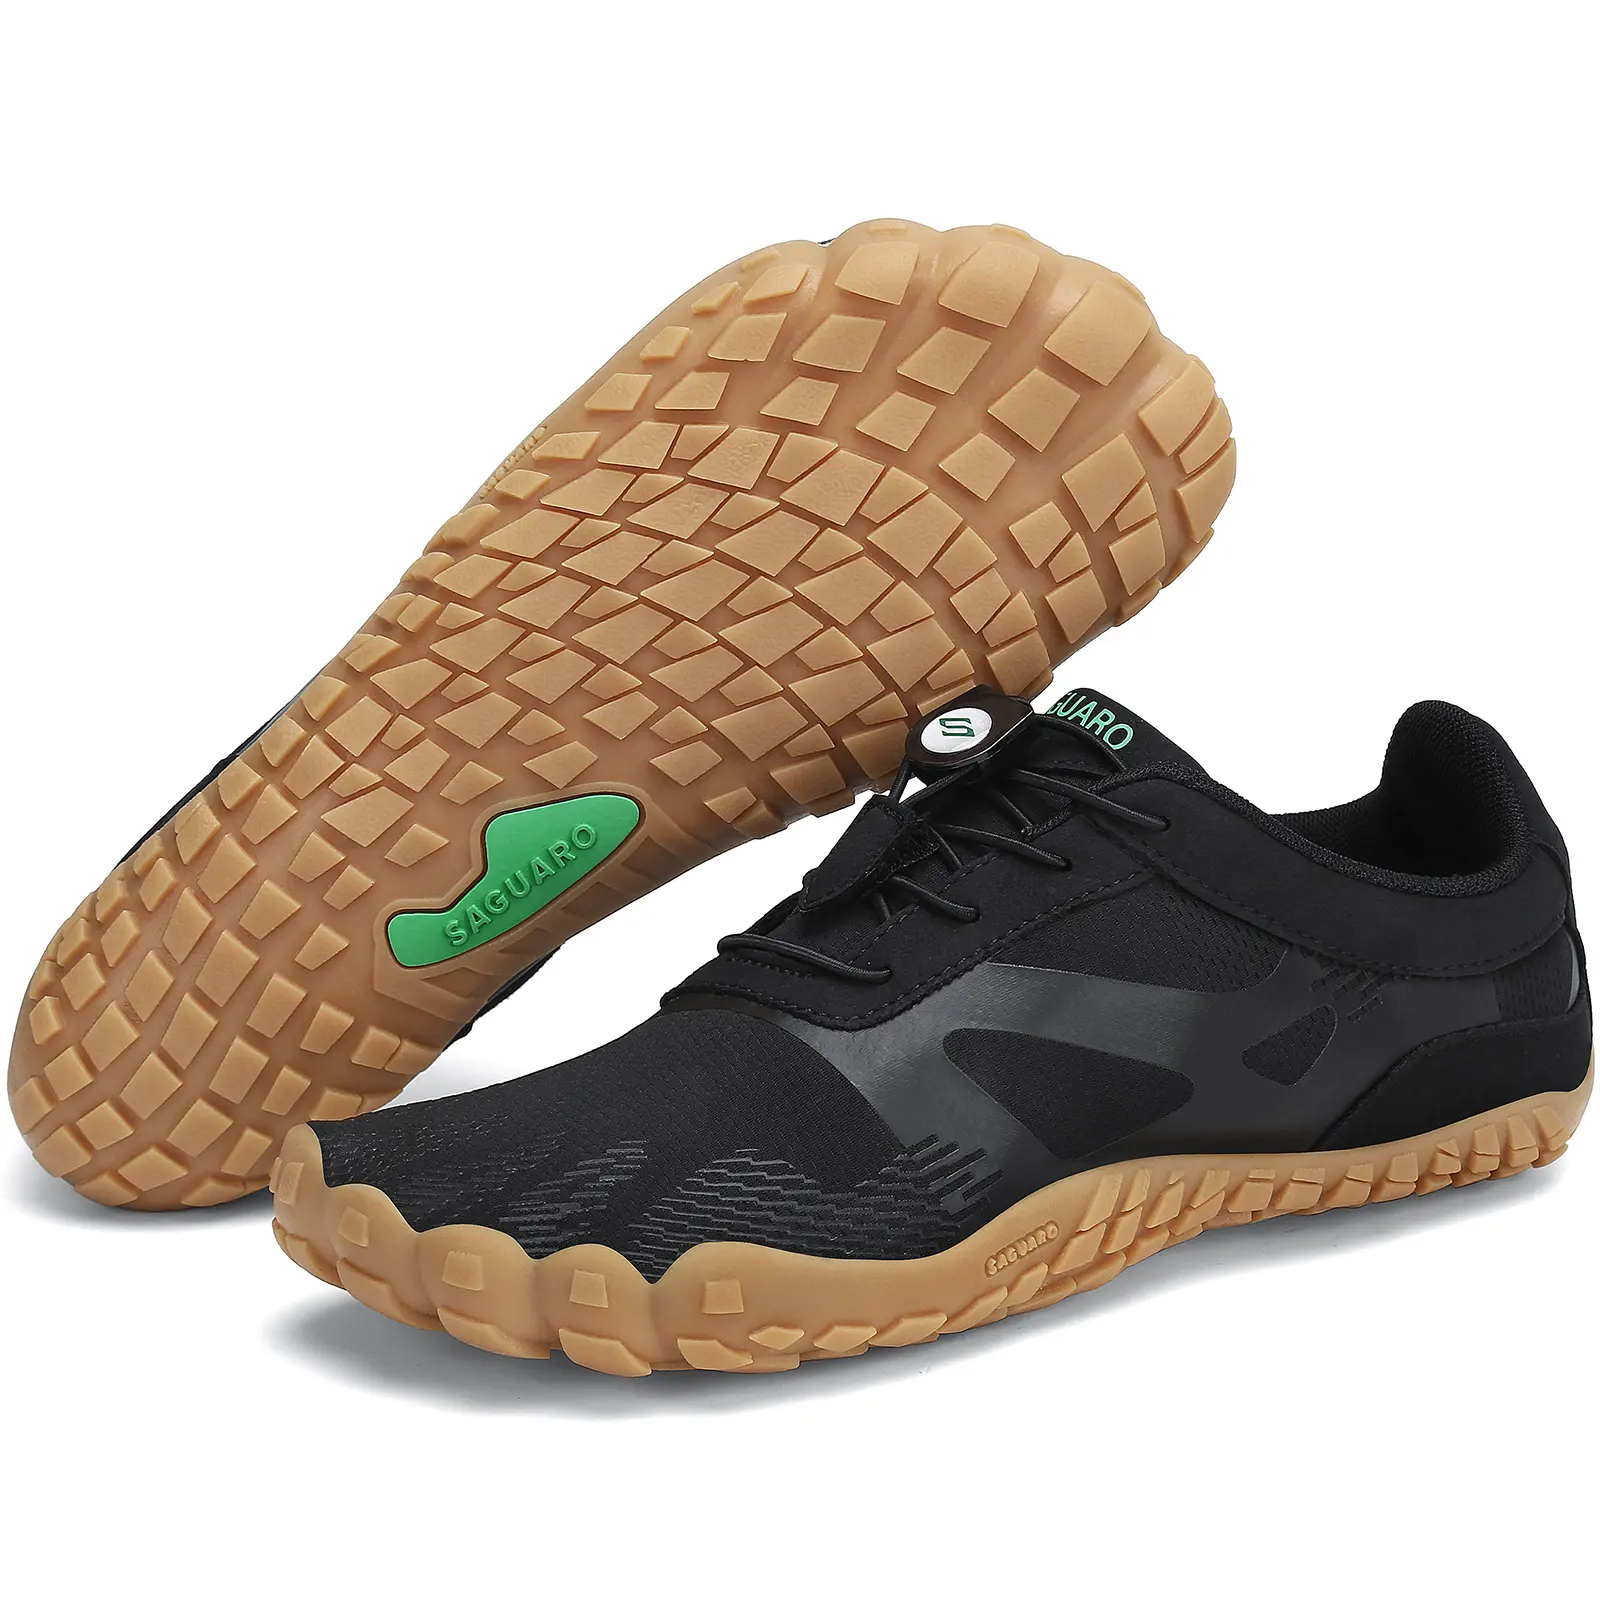 Dropshipping Agent Produit Shopify 2021 Saguaro Barefoot Zero drop Minimalist Trail Running Shoes